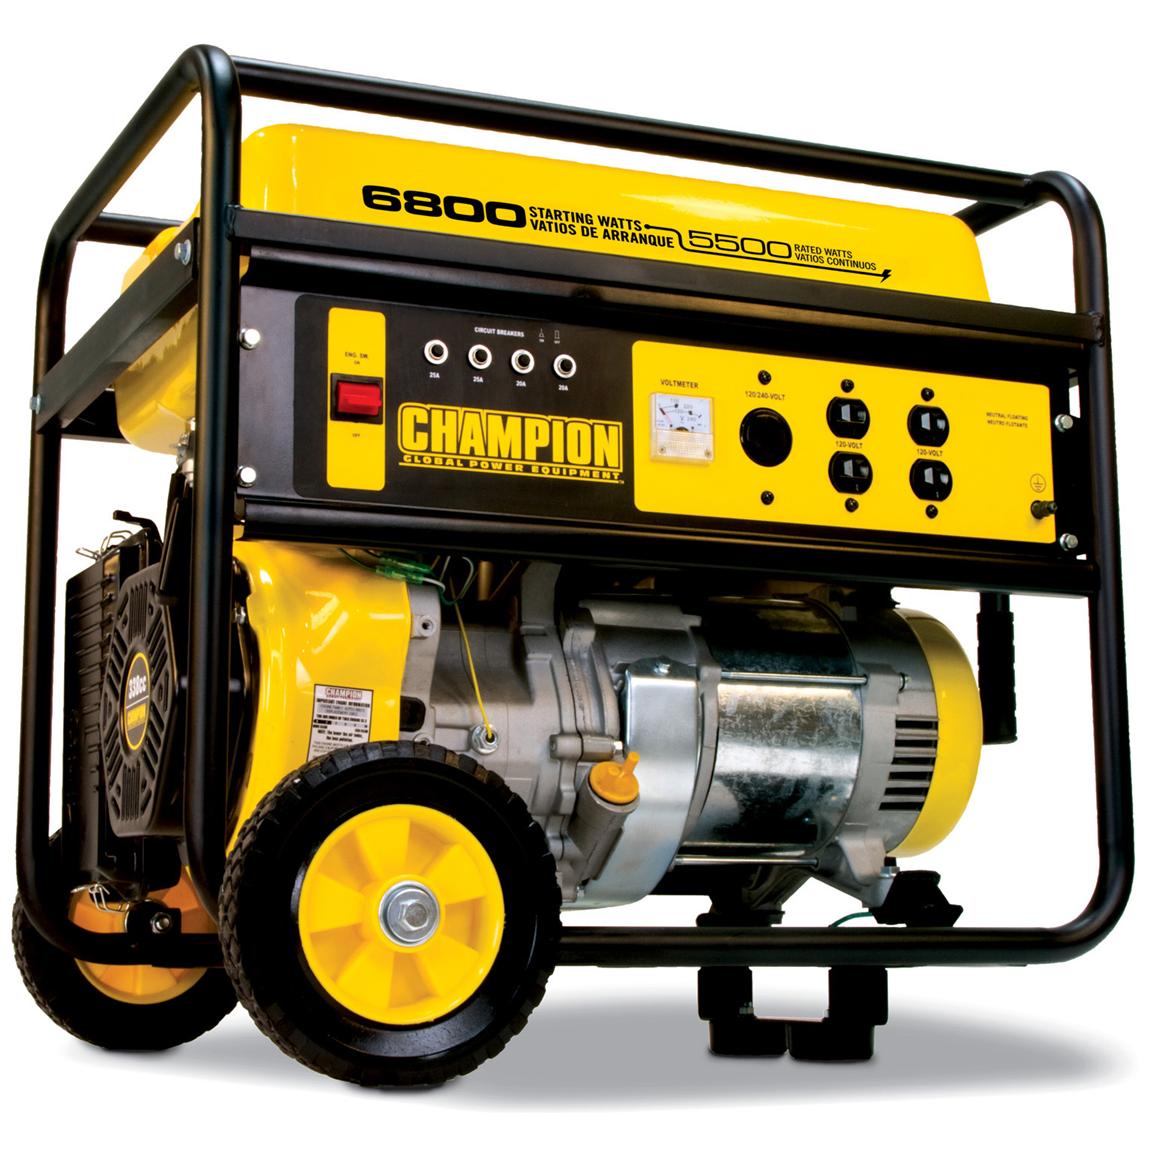 champion-power-equipment-carb-compliant-6-800-watt-portable-gas